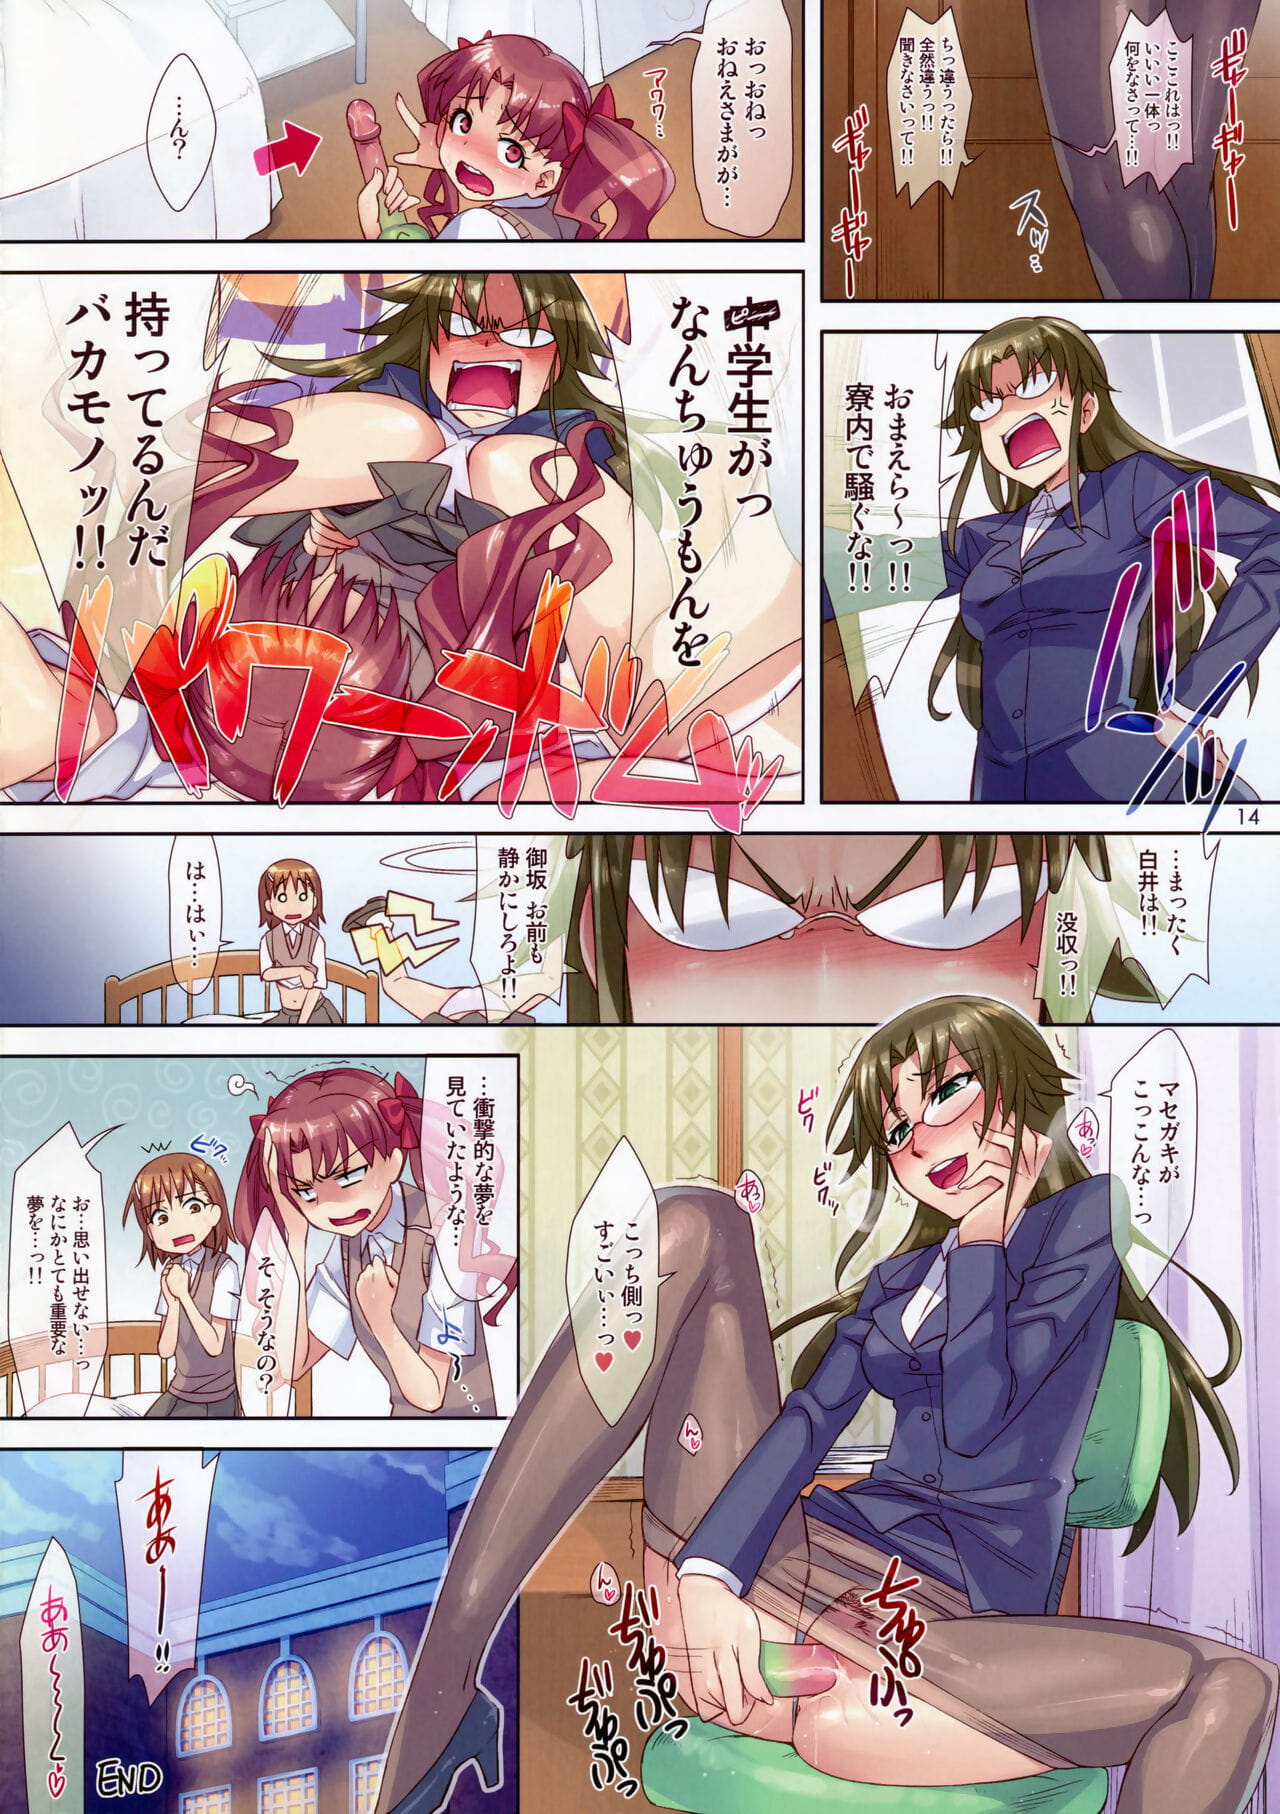 comic1☆4 redrop 宮本 煙 おつまみ mousou 超電磁砲(レールガン) toaru 化学 no 超電磁砲(レールガン) decensored